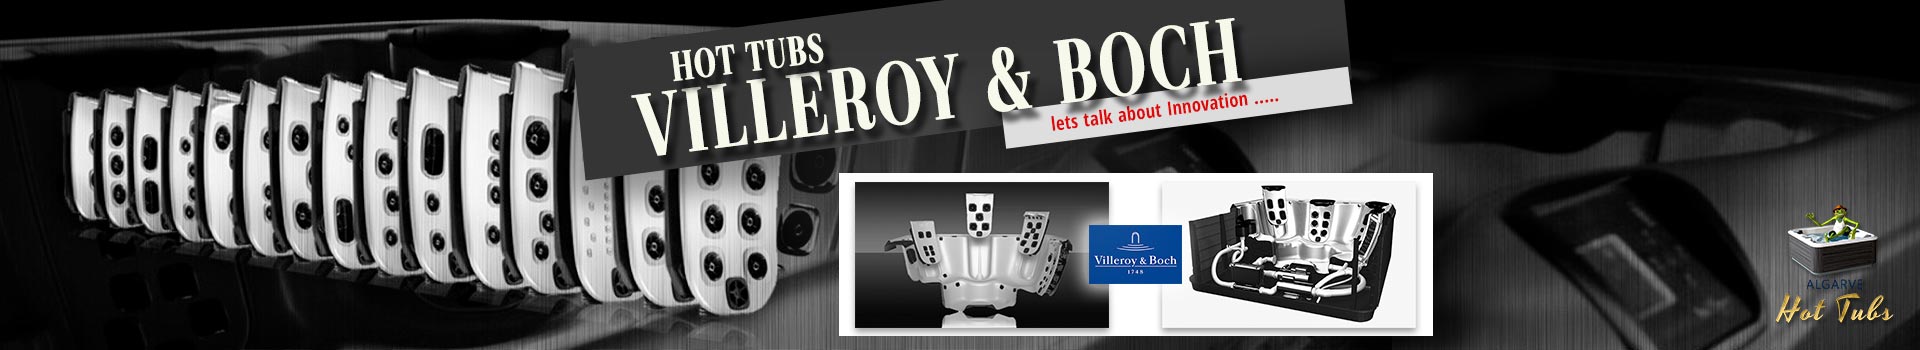 Hottubs - Villeroy & Boch Series - Wellness Dreams Algarve